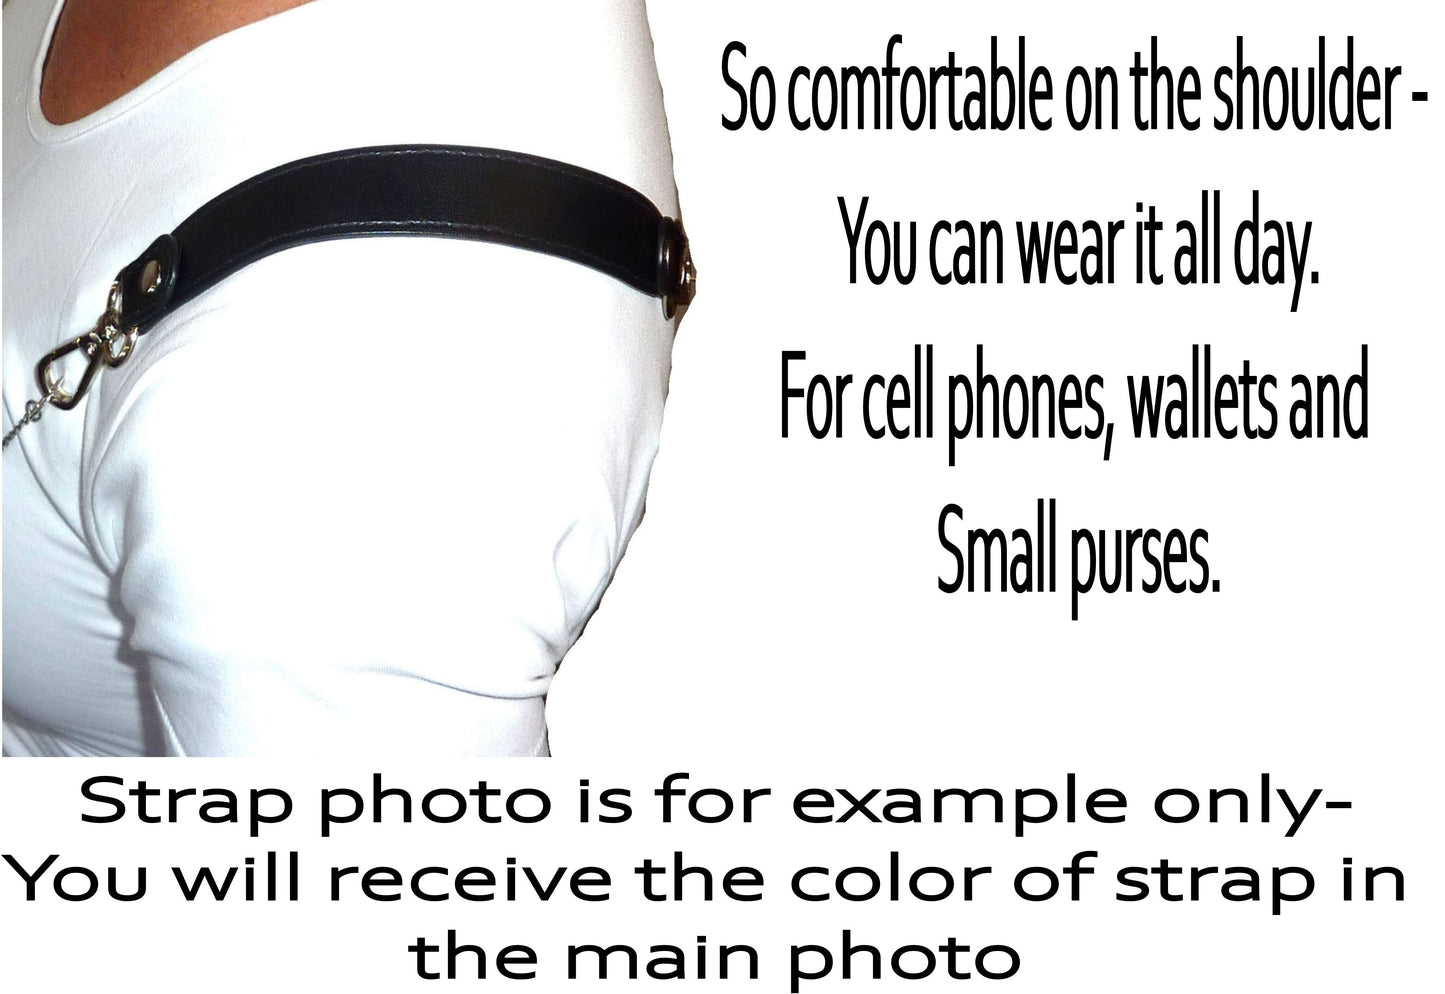 Gold & Howlite Beaded - Women's Crossbody Beaded Adjustable Strap Lightweight Cell Phone Wallet Handbag Purse Fashion Strong 51"